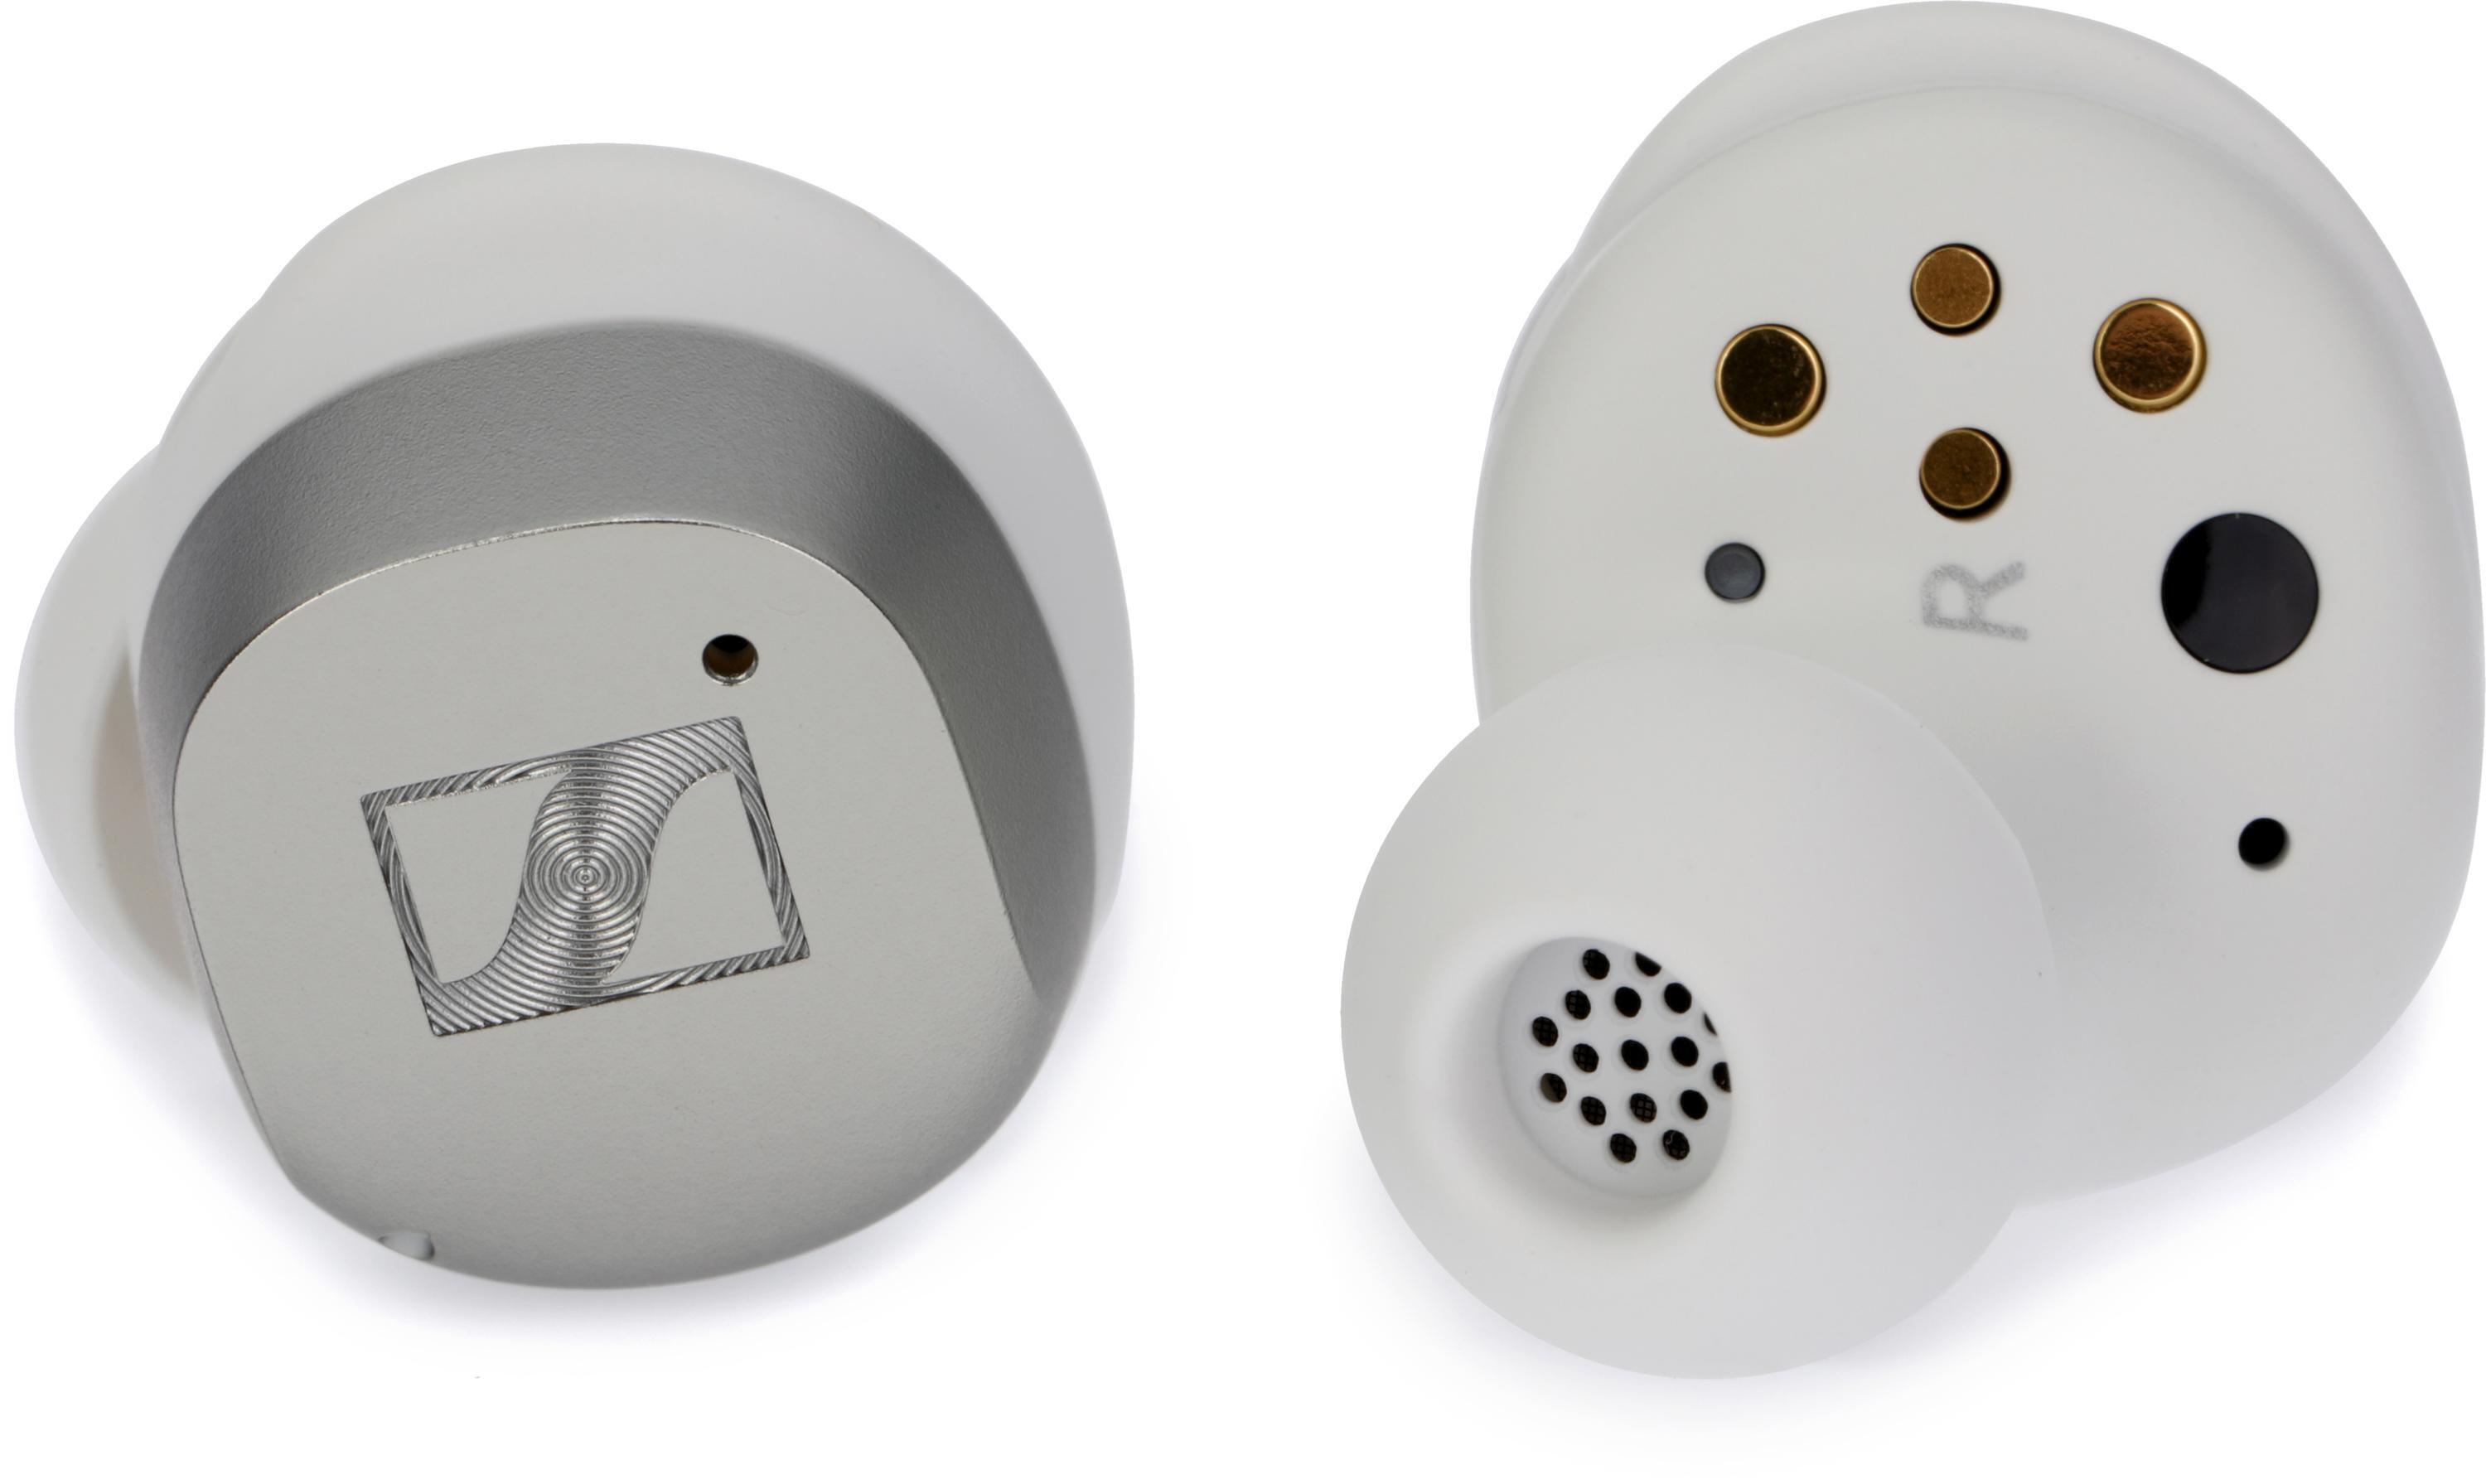 Sennheiser Momentum True Wireless 4 Earbuds - White Silver